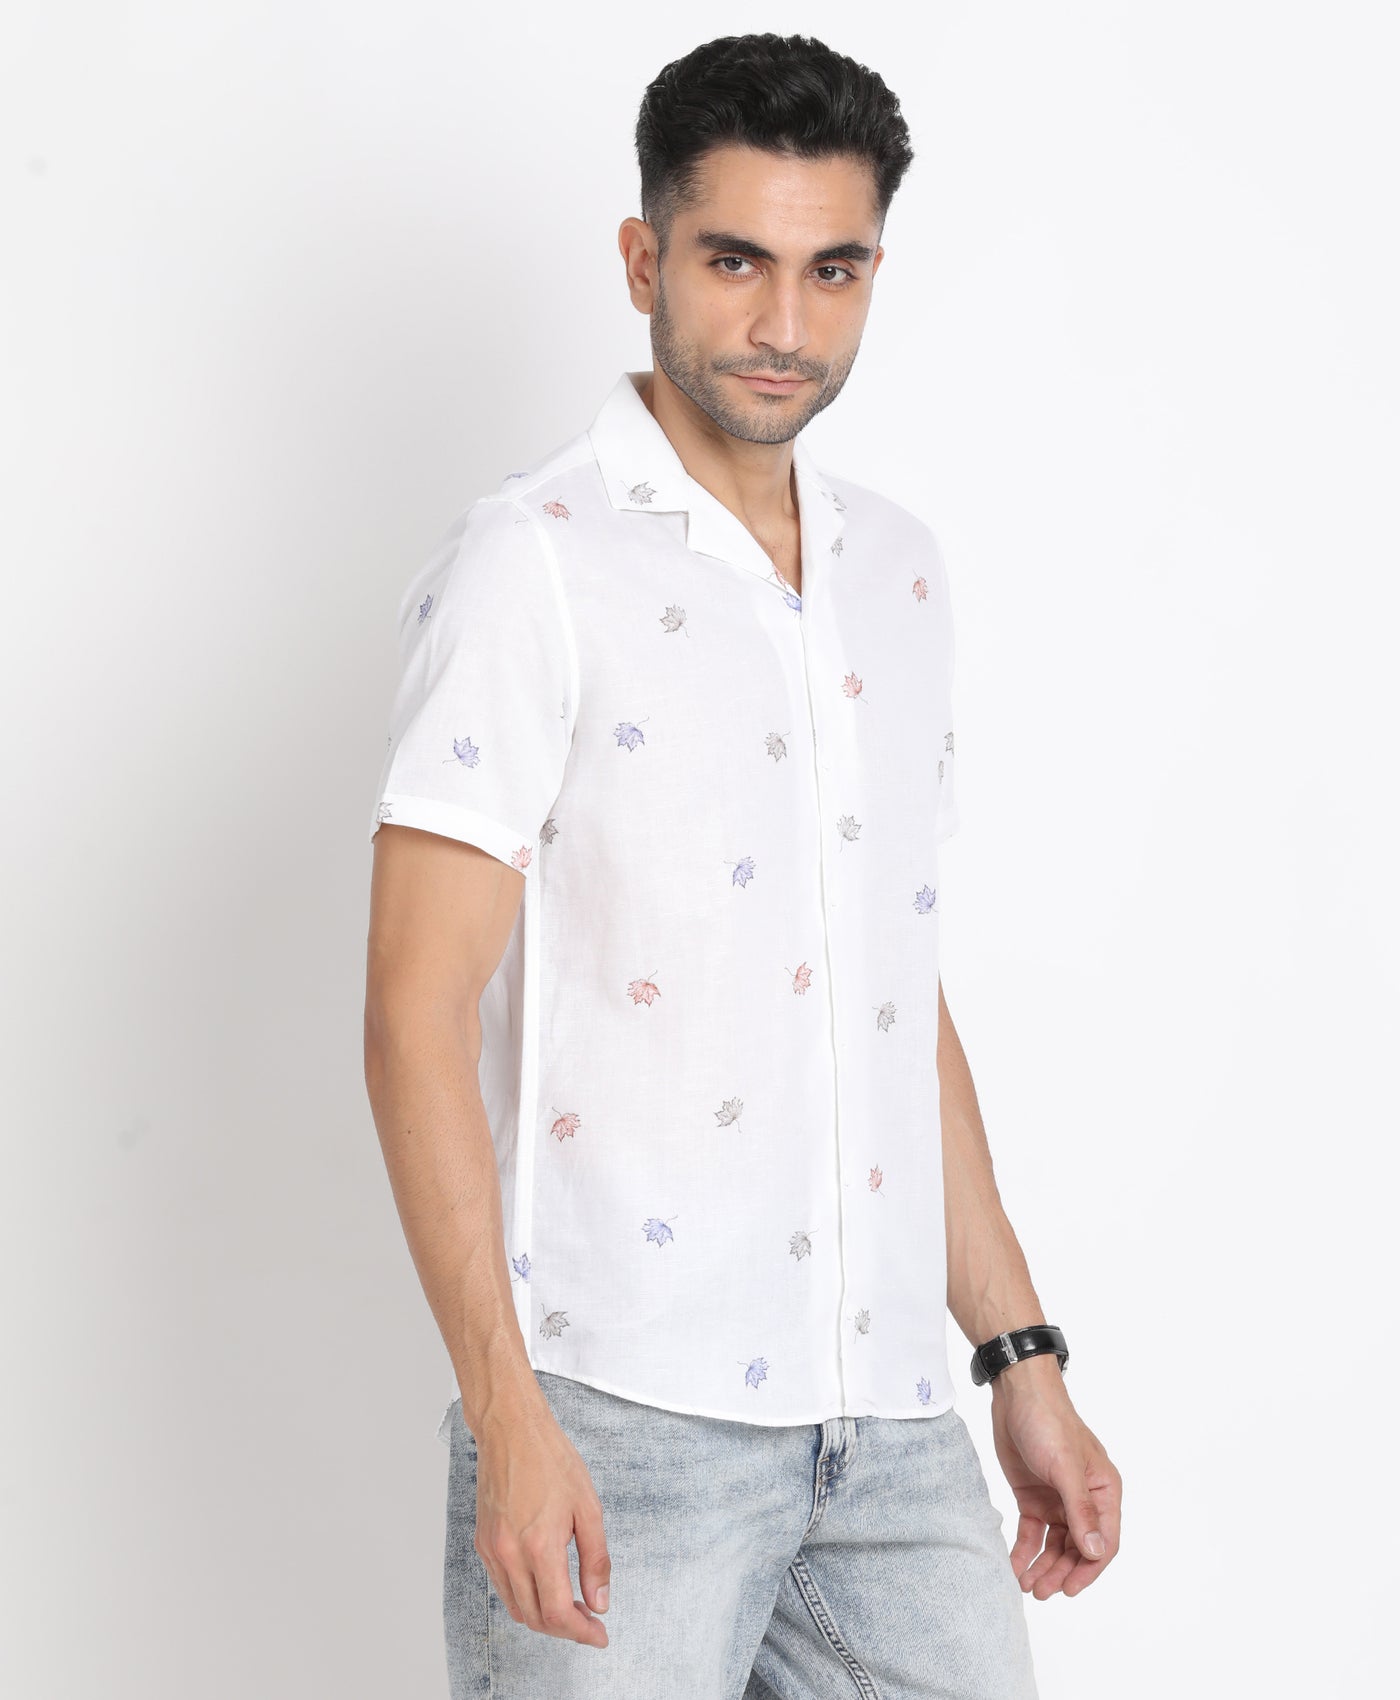 Cotton Linen White Printed Slim Fit Half Sleeve Cuban Collar Casual Shirt